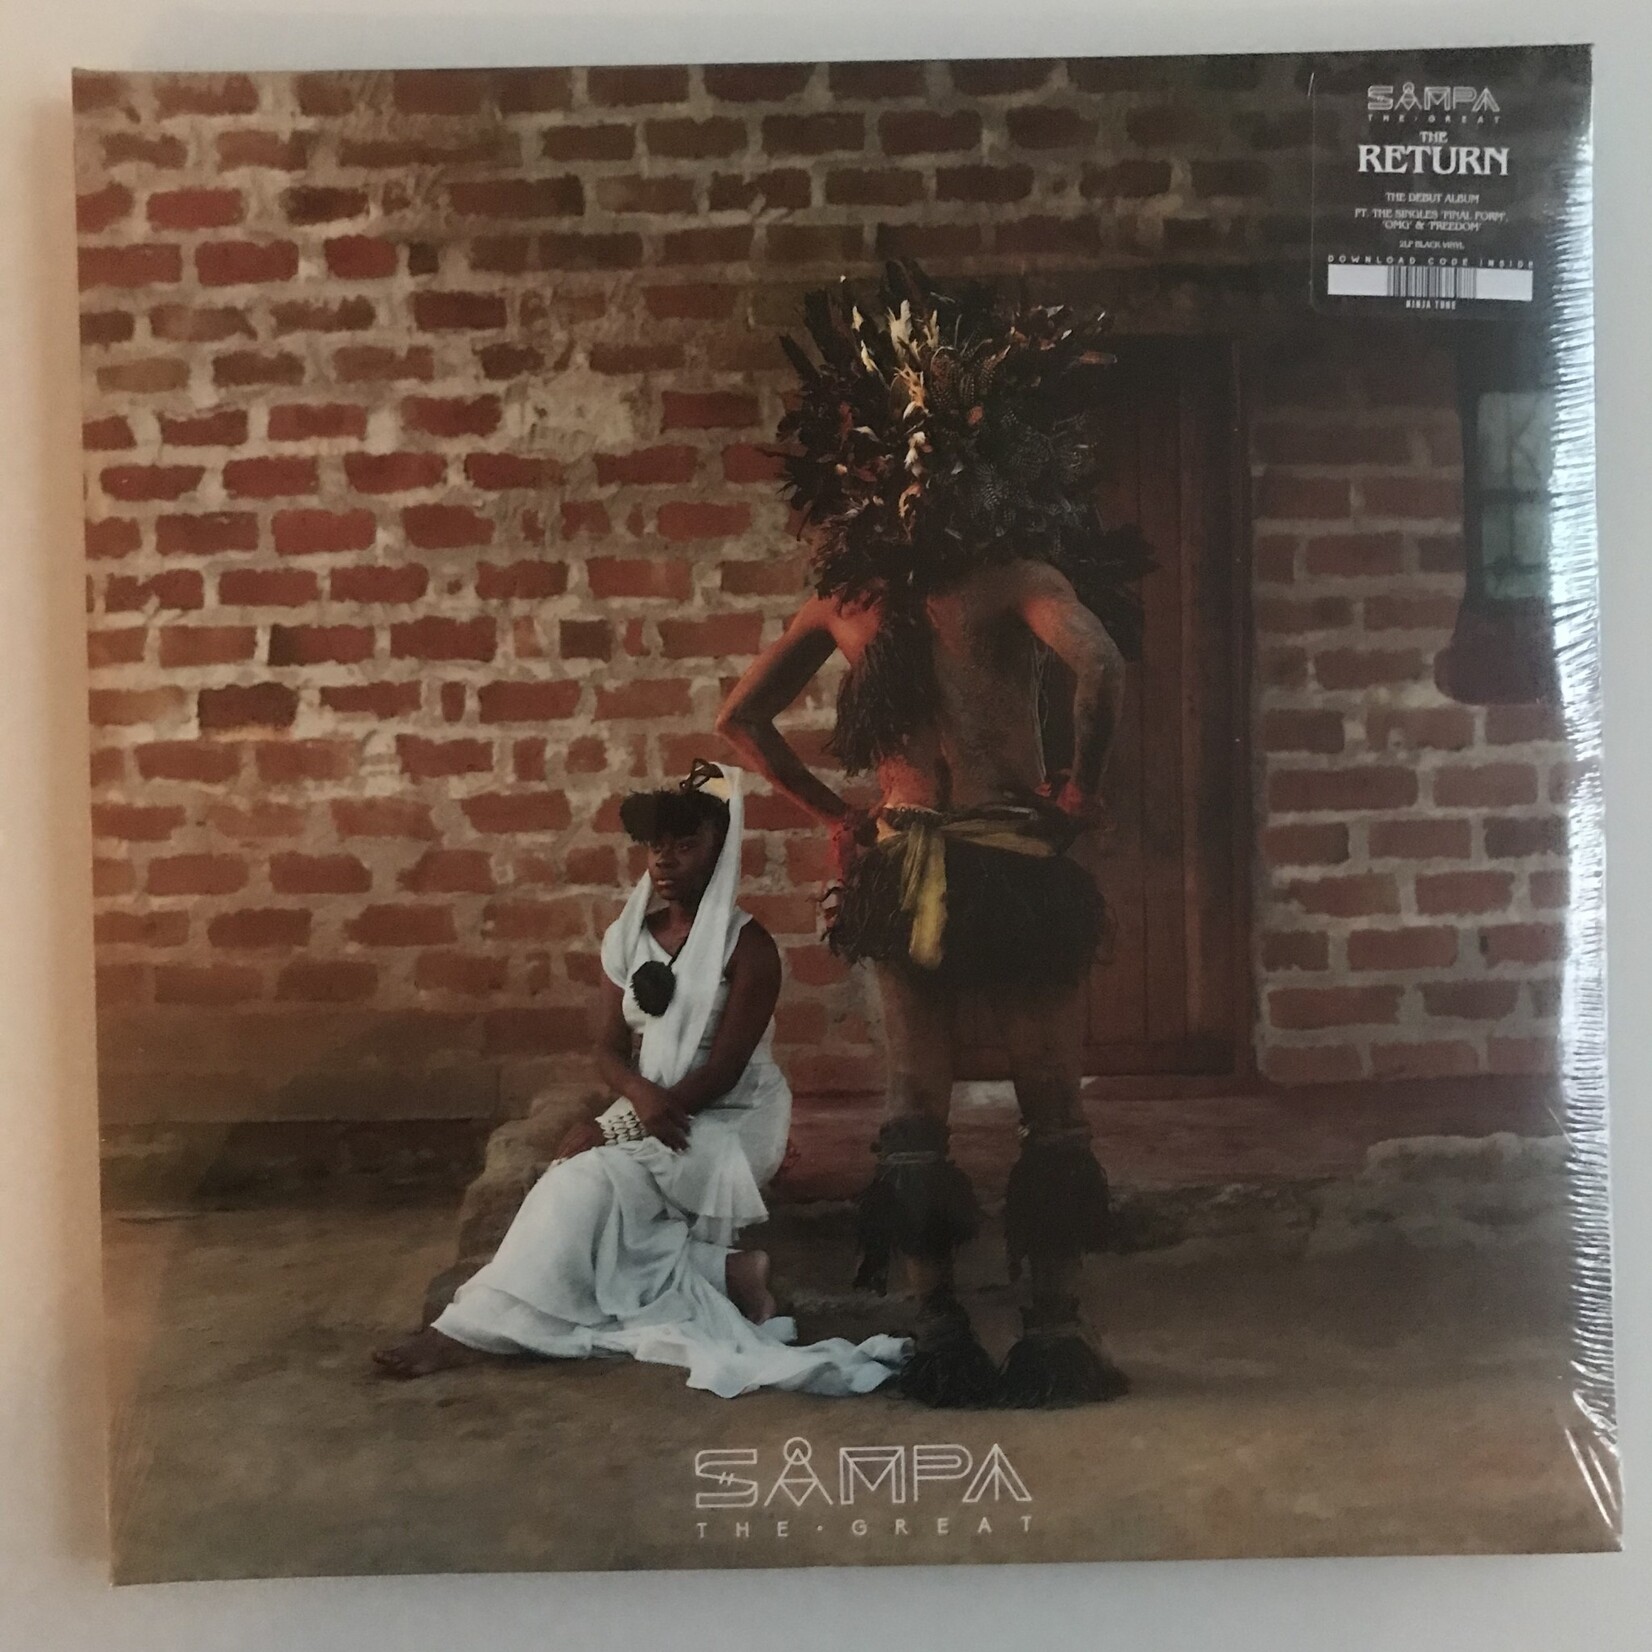 Sampa The Great - The Return - Vinyl LP (NEW)